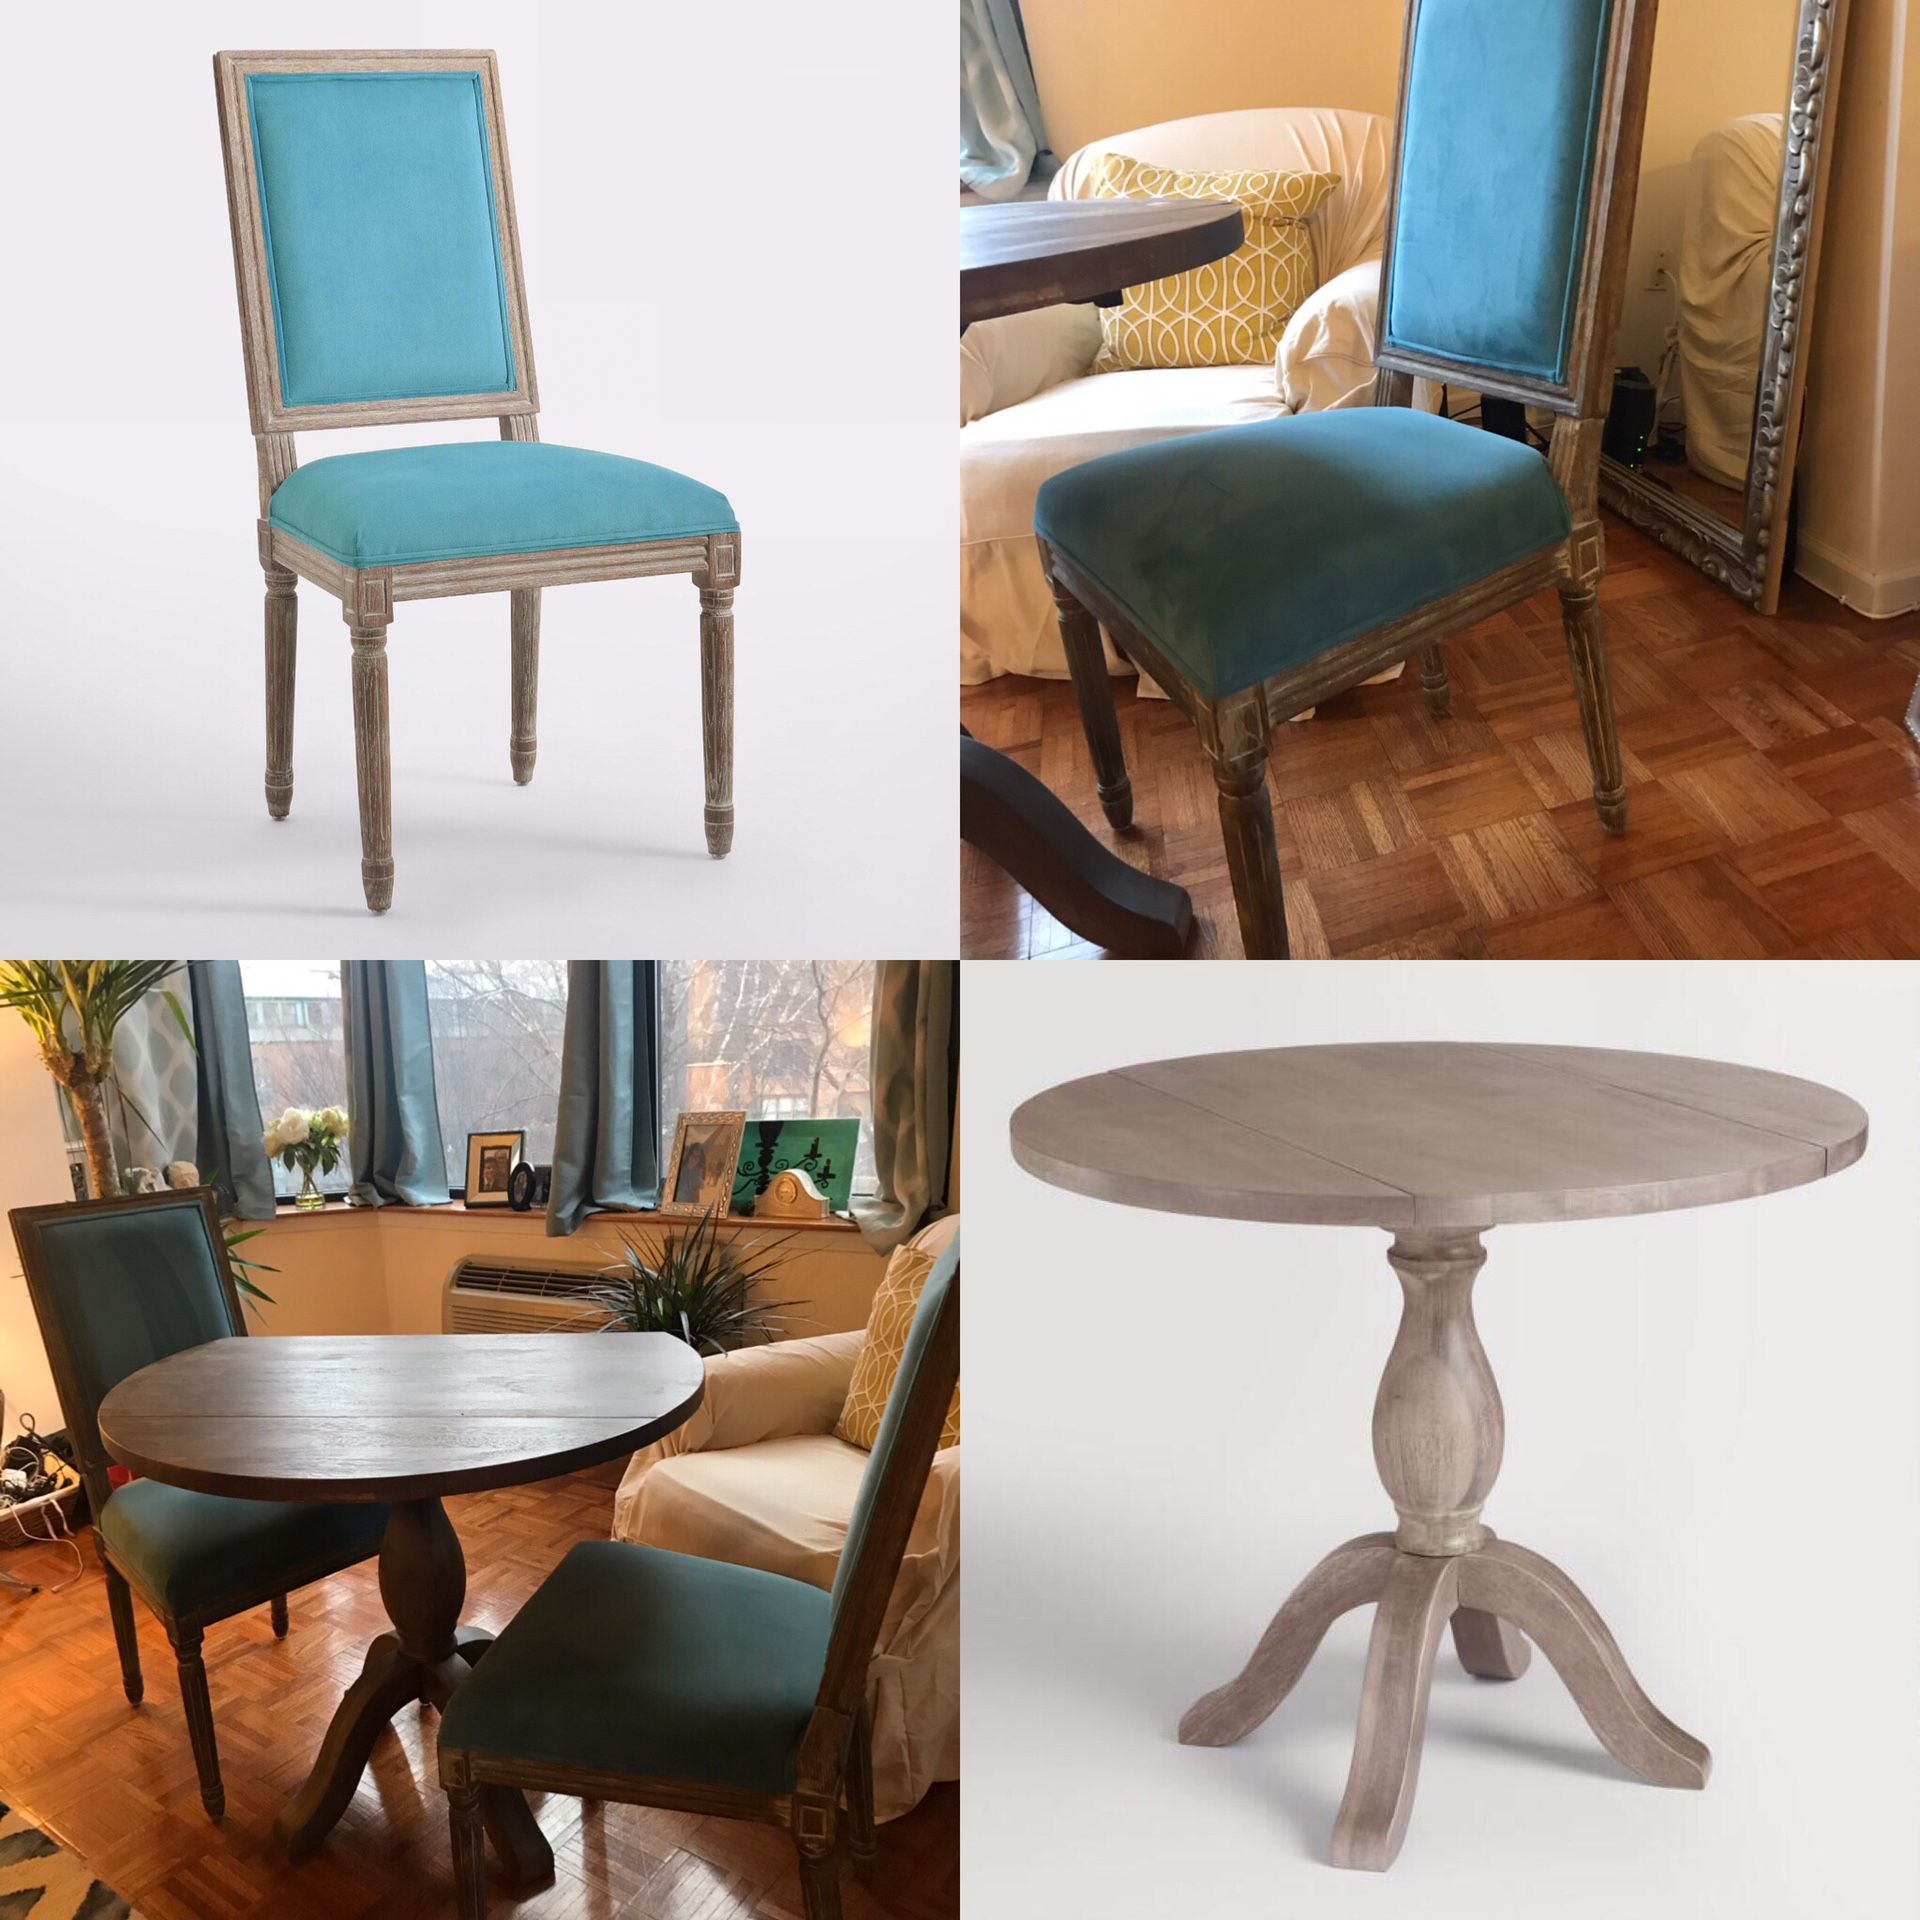 Pedestal dining set for 2 - drop leaf table and 2 velvet microfiber chairs